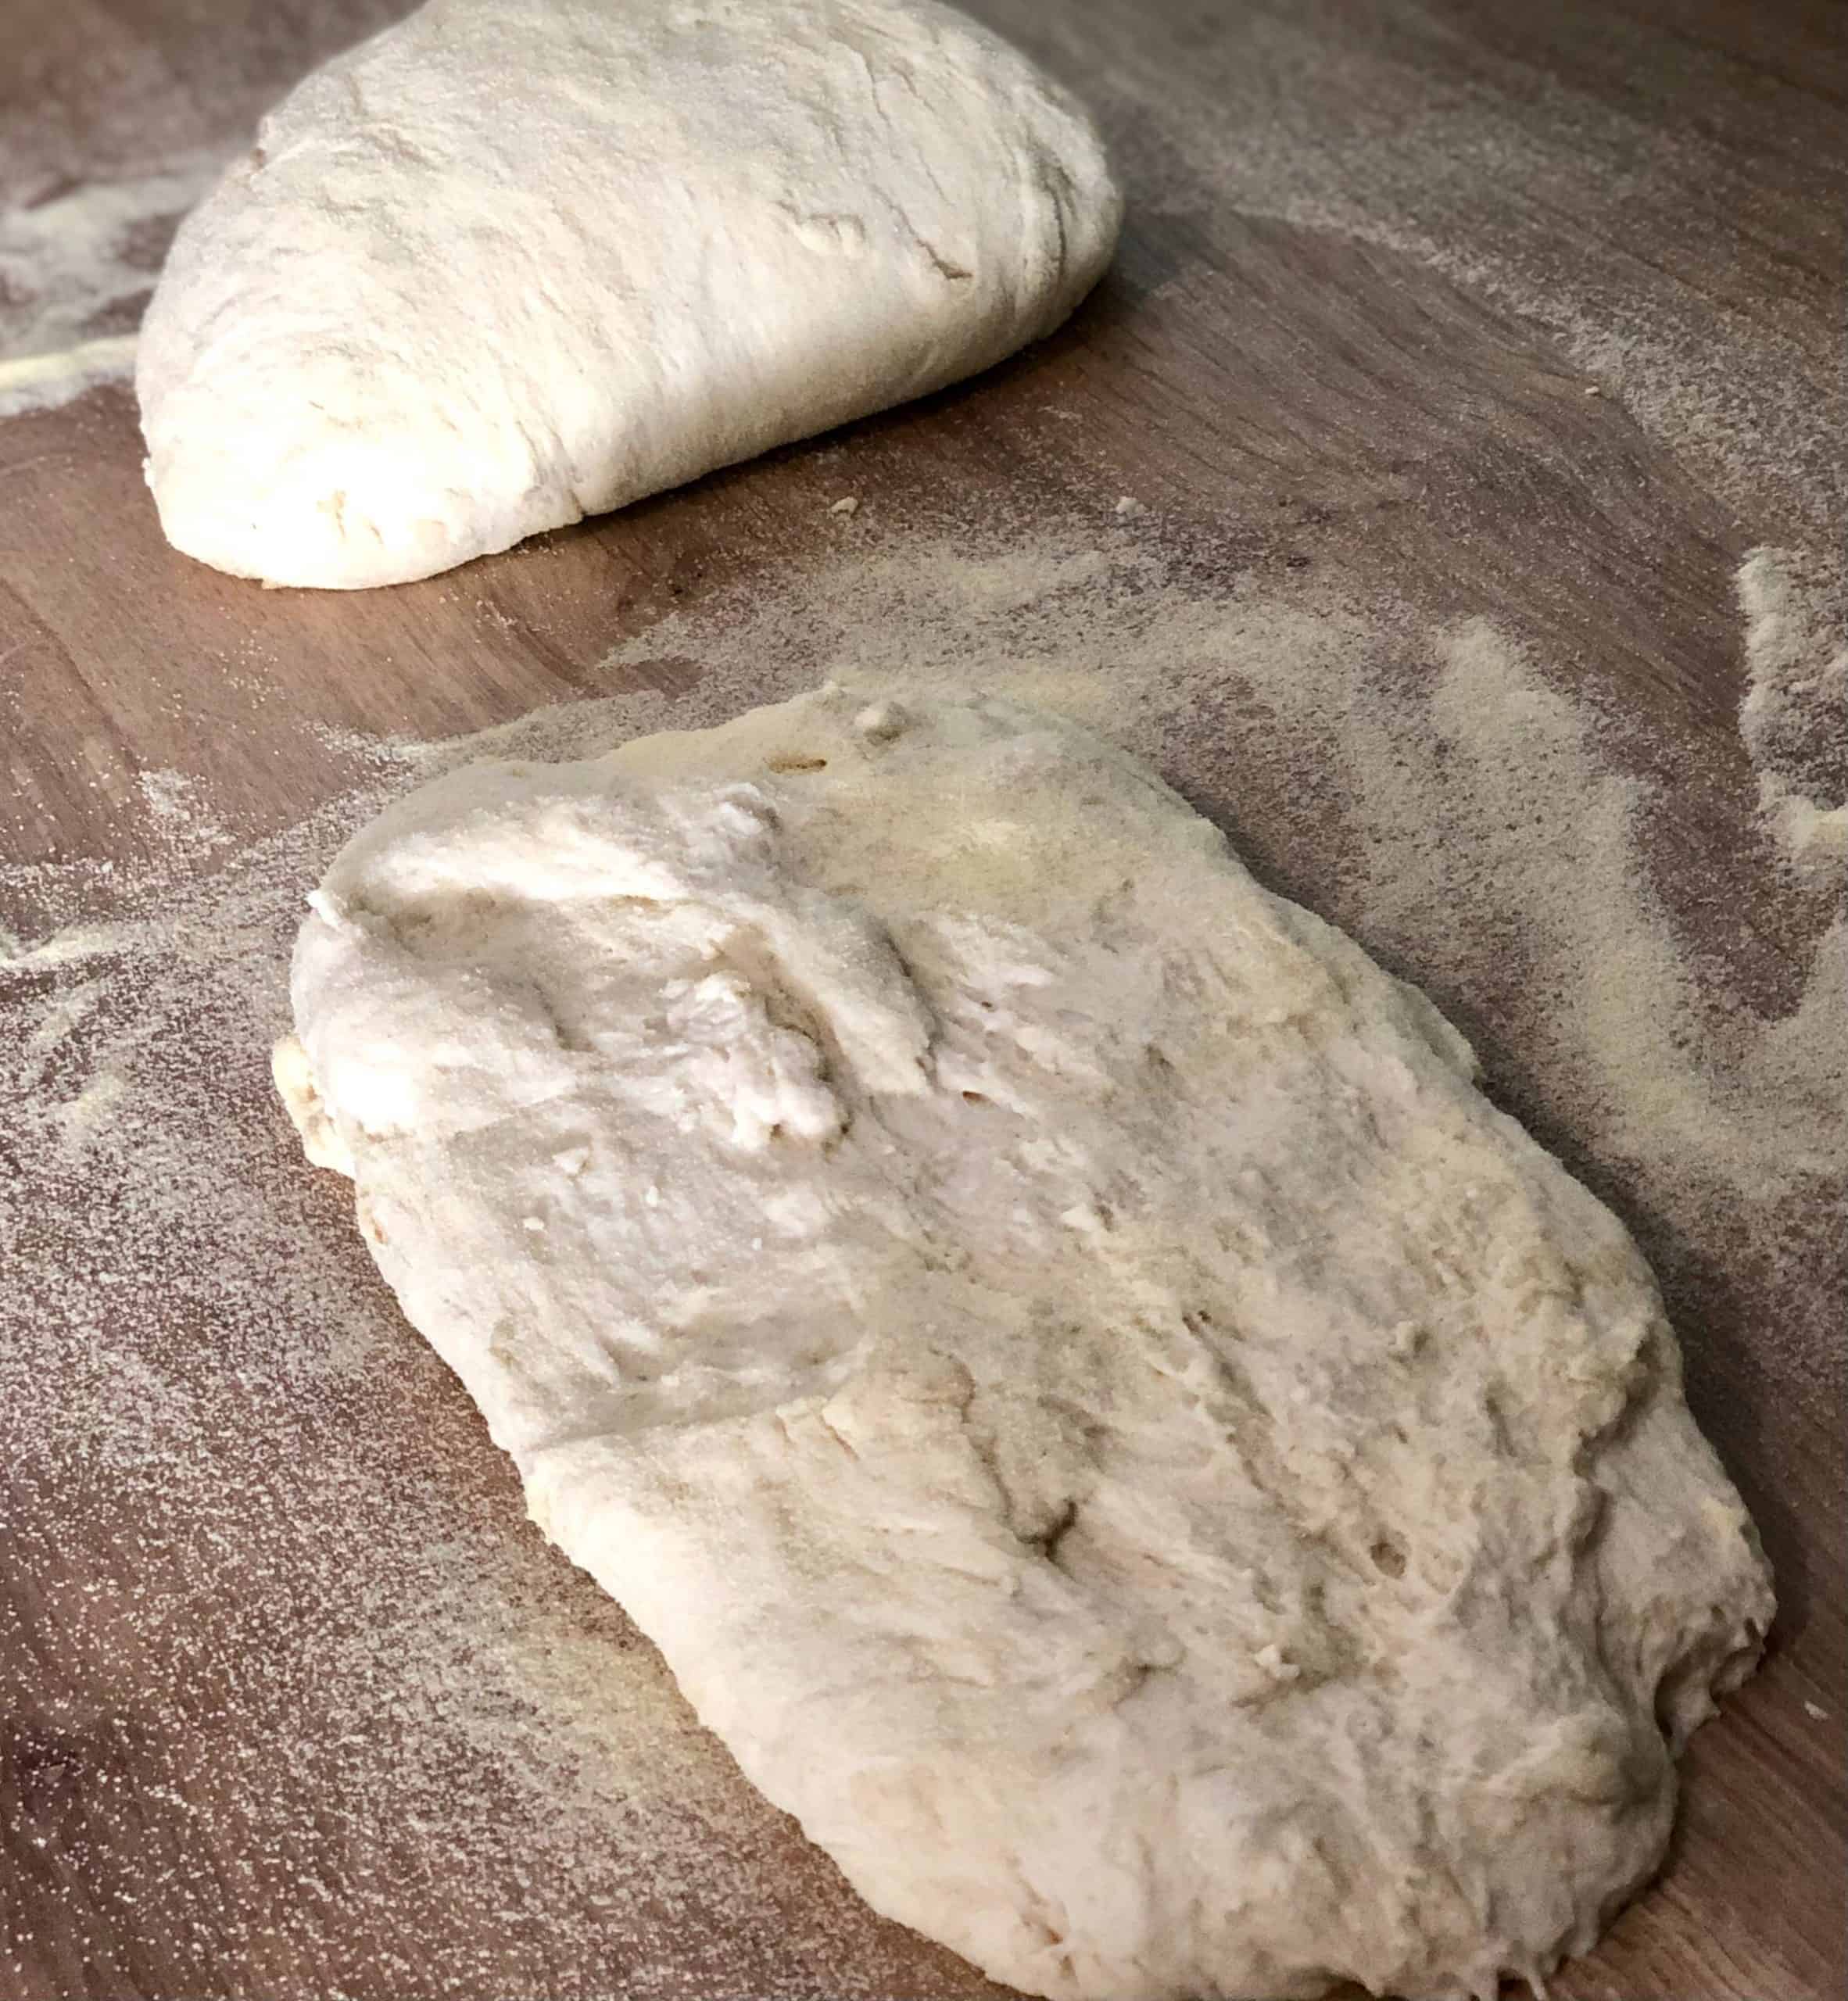 No knead bread dough cut in two pieces